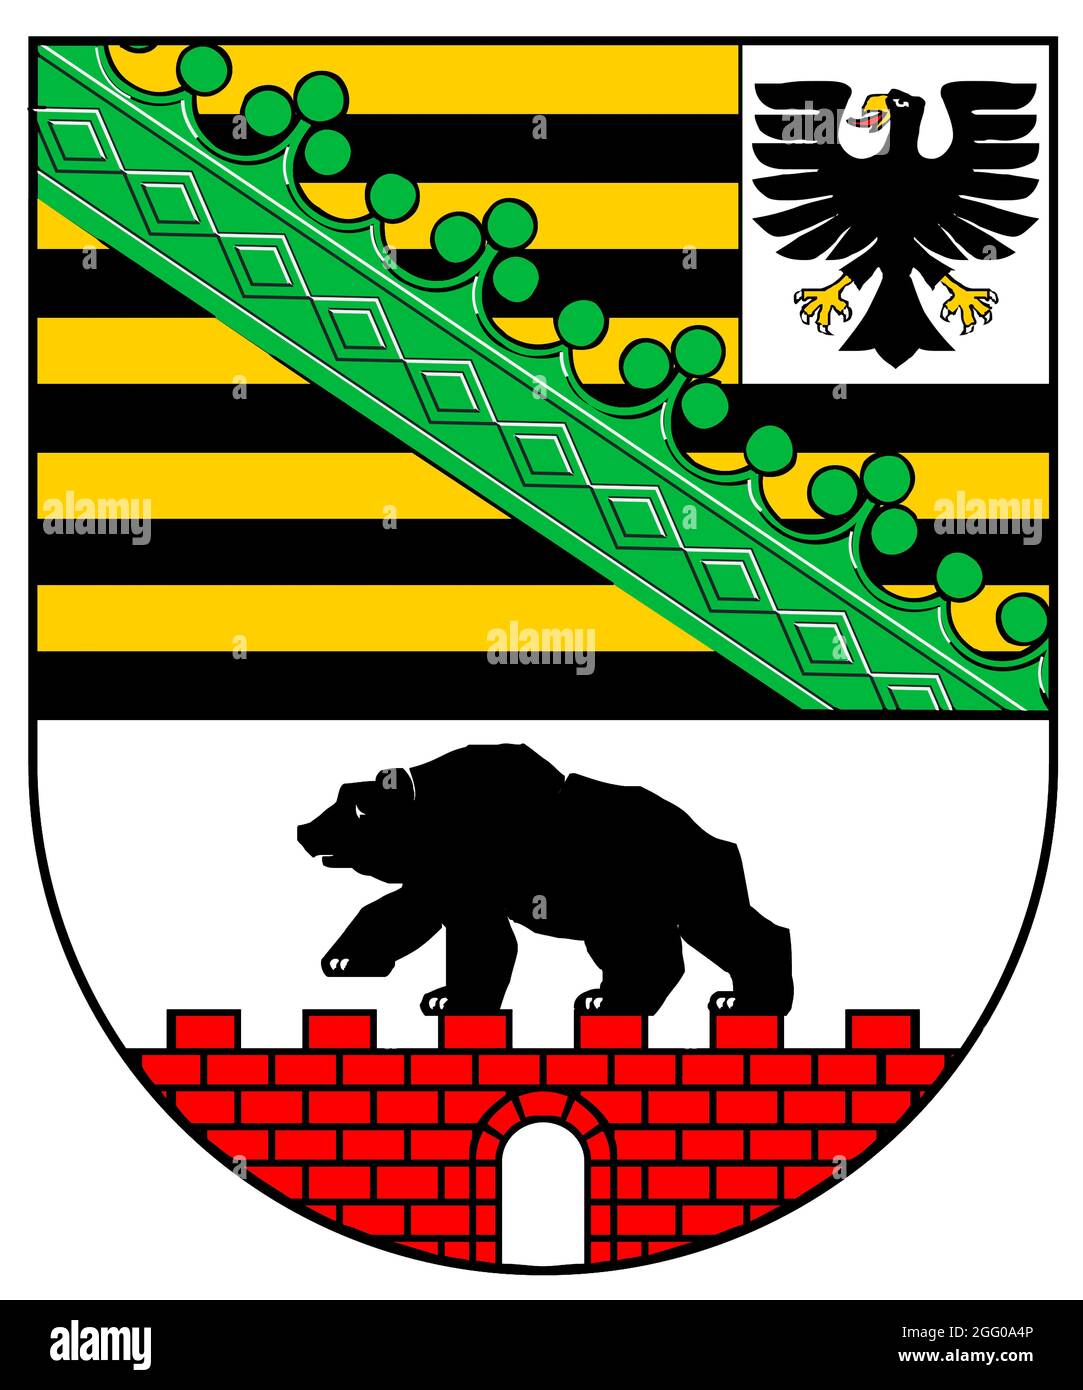 Stemma dello stato tedesco Sassonia-Anhalt - Germania. Foto Stock